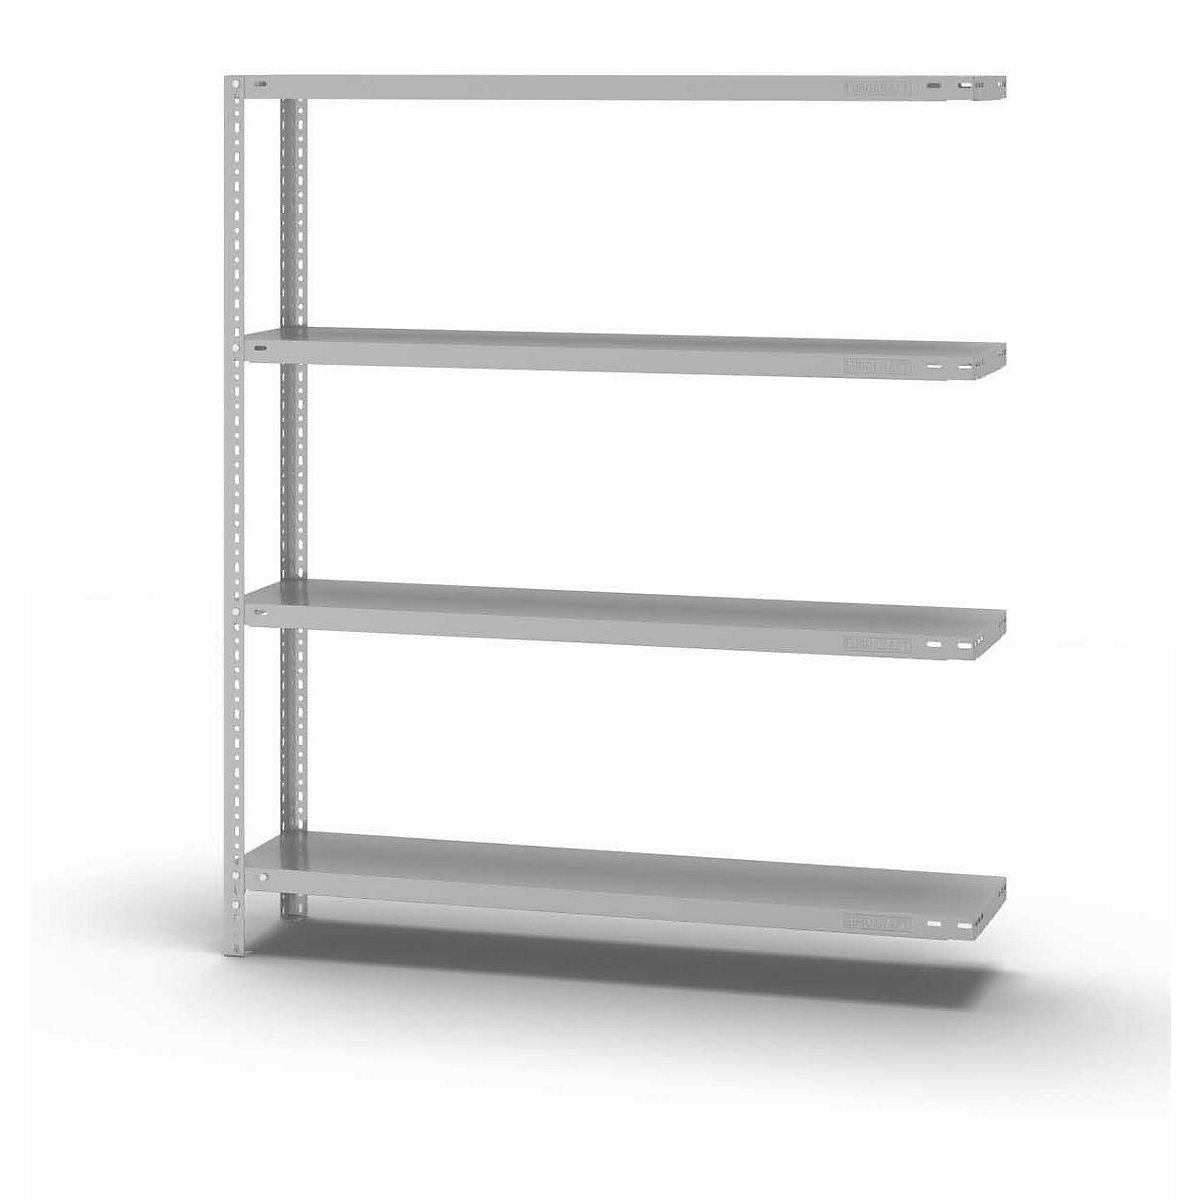 Bolt-together shelf unit, light duty, plastic coated - eurokraft pro